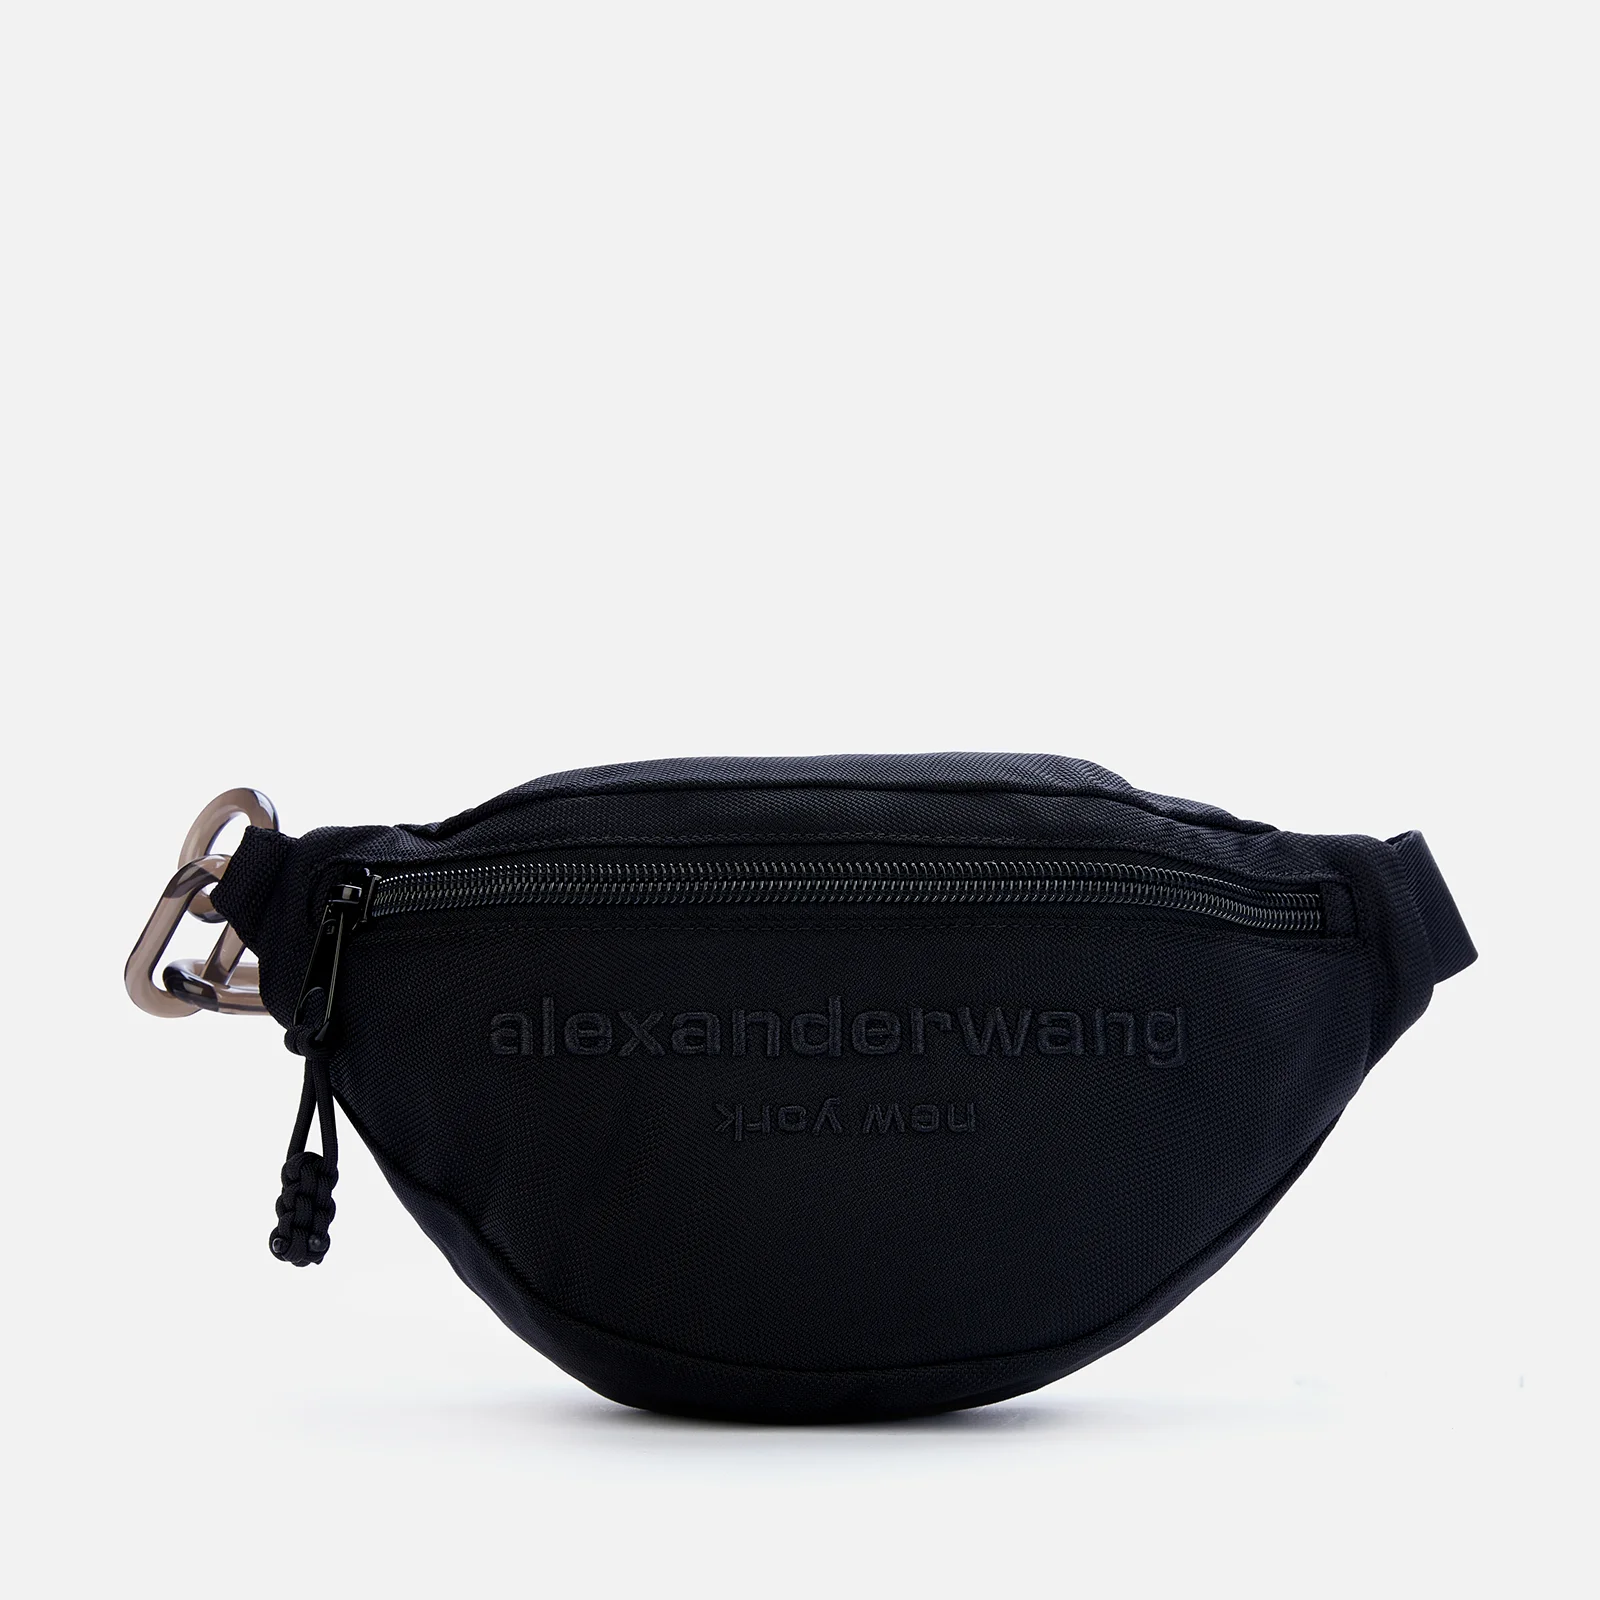 Alexander Wang Women's Primal Belt Bag - Black Image 1